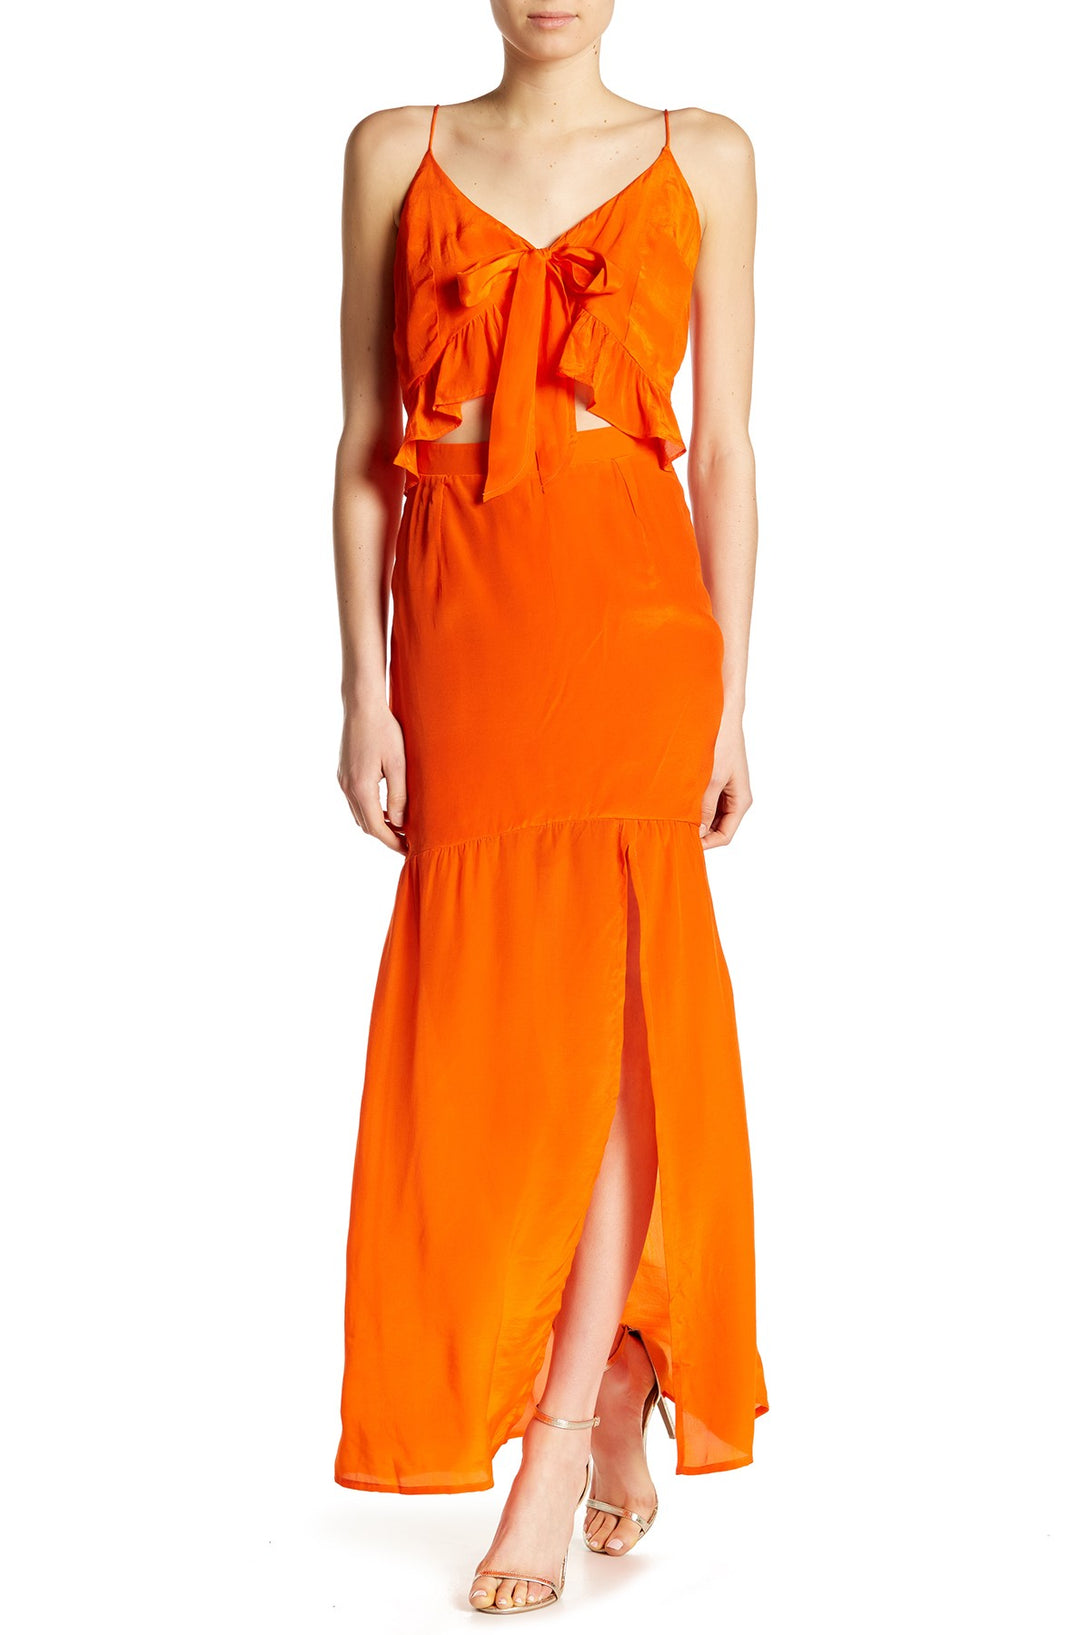  orange summer maxi dress, formal dresses for women, plus size maxi dresses, Shahida Parides,